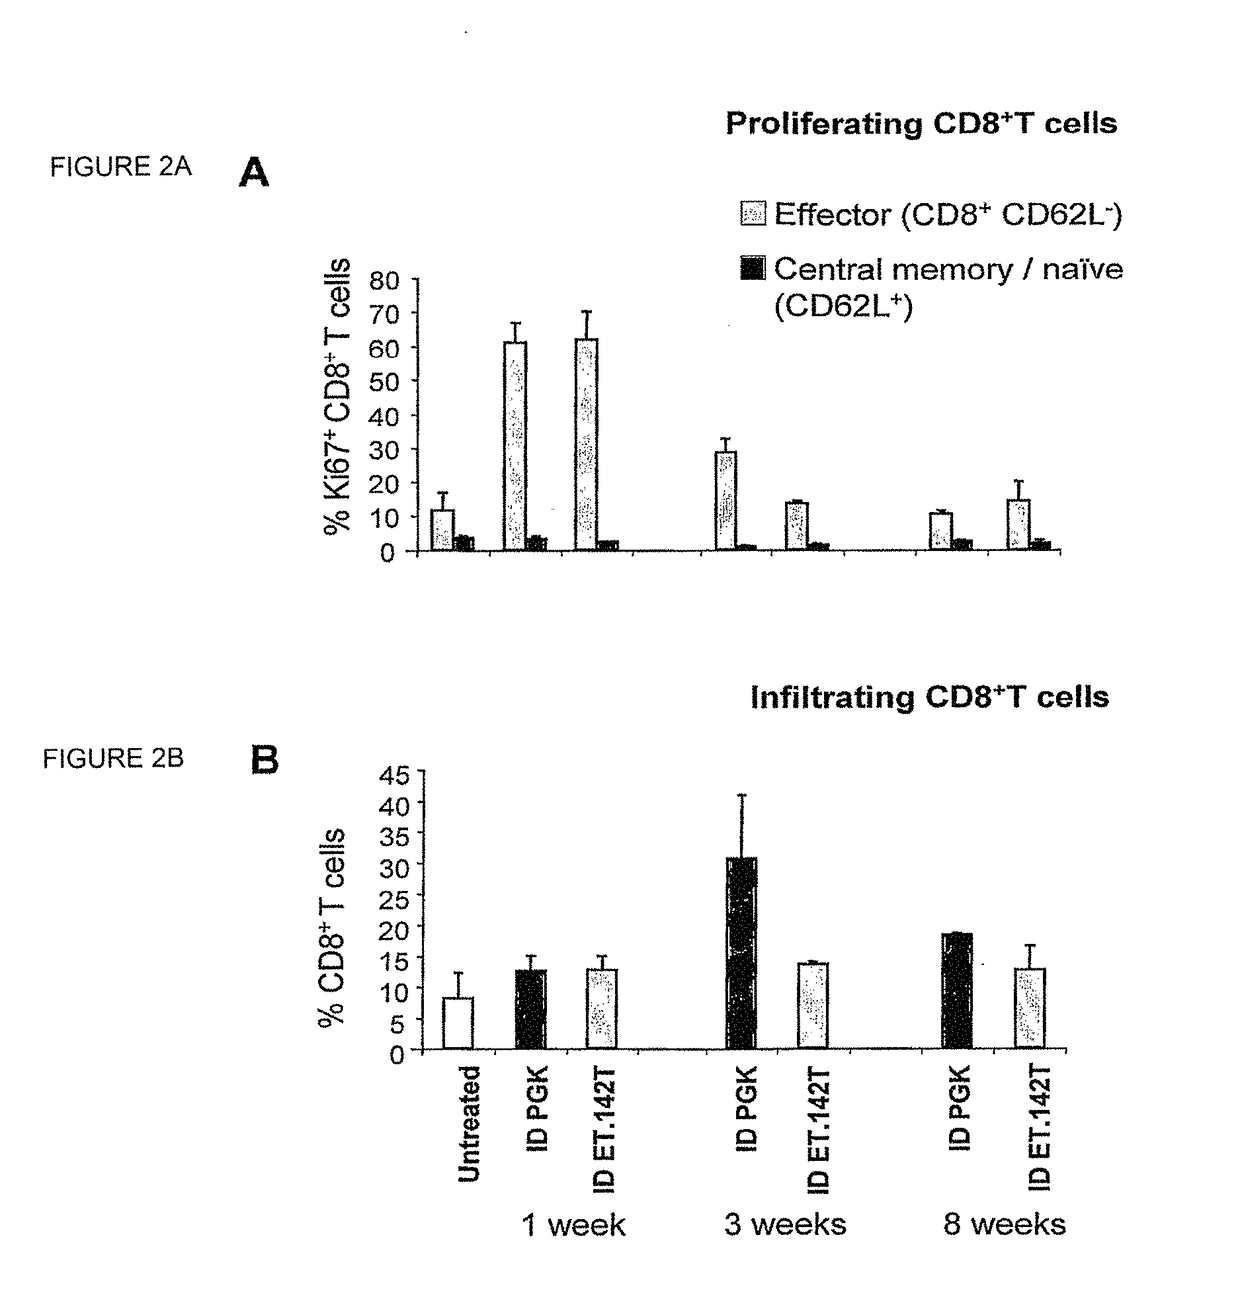 Gene vector for inducing transgene-specific immune tolerance